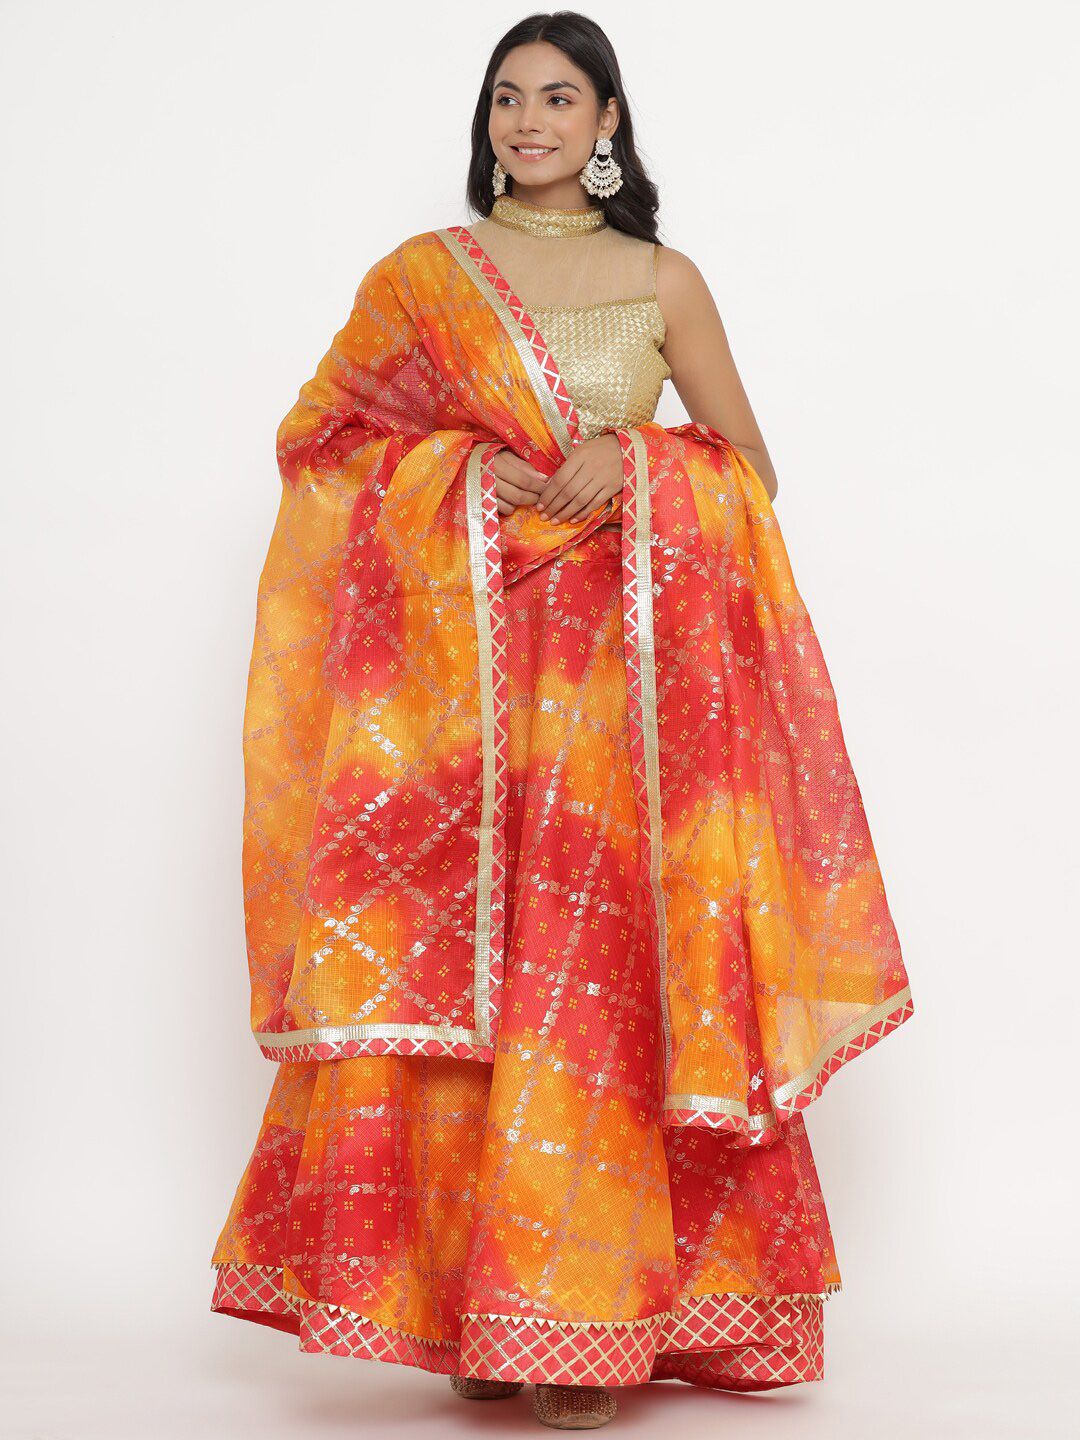 Kesarya Embellished Semi-Stitched Lehenga & Unstitched Blouse With Dupatta Price in India